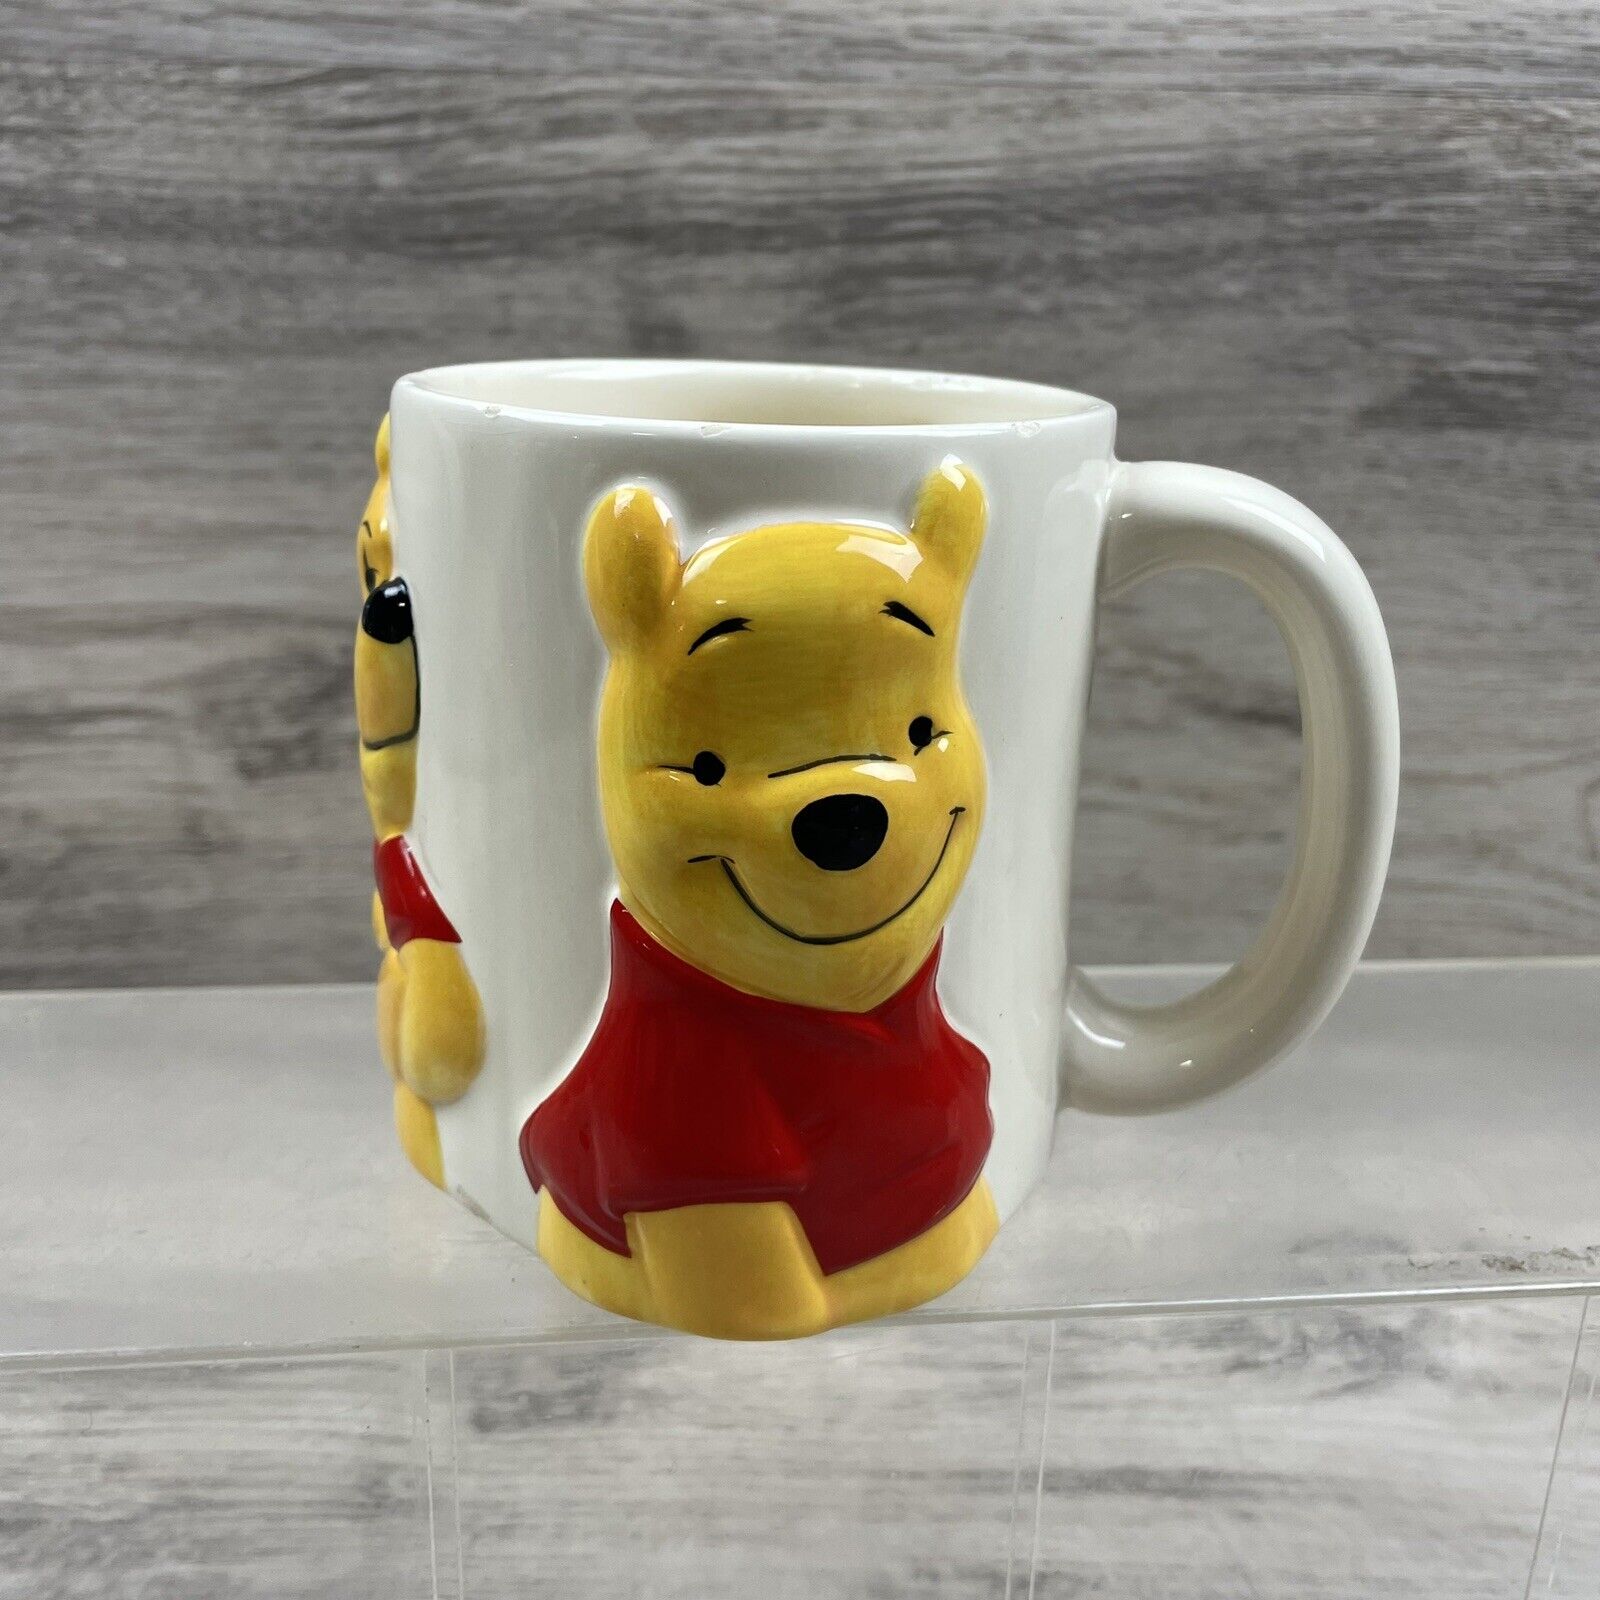 Vintage Disney’s Winnie The Pooh Coffee Mug Collector’s Raised Ceramic